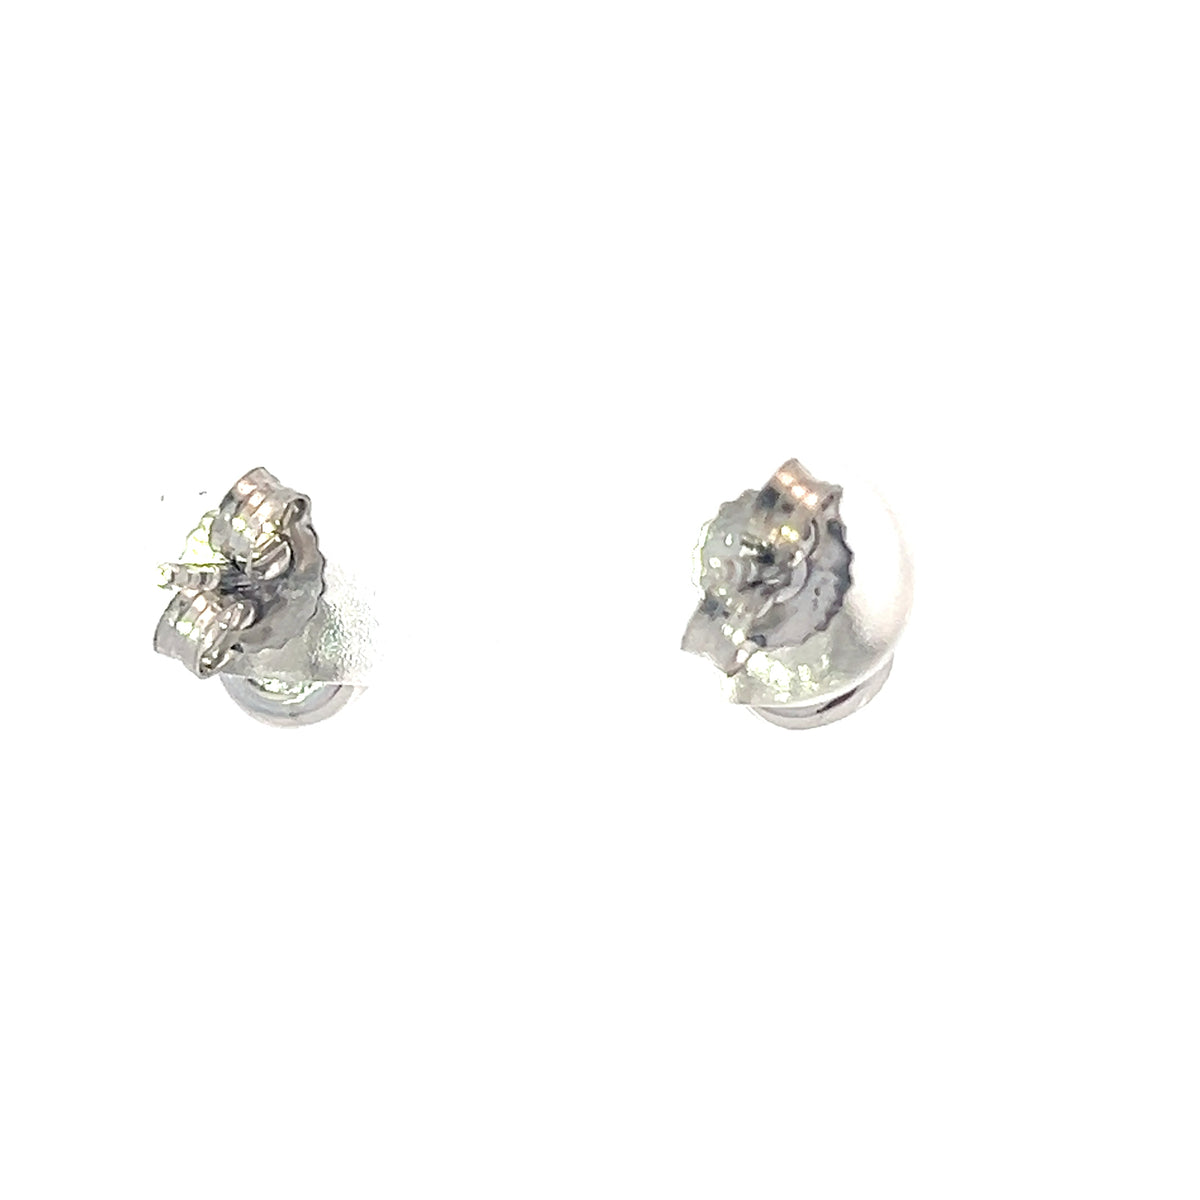 10K White Gold 0.15cttw Round Brilliant Cut Canadian Diamond Earrings